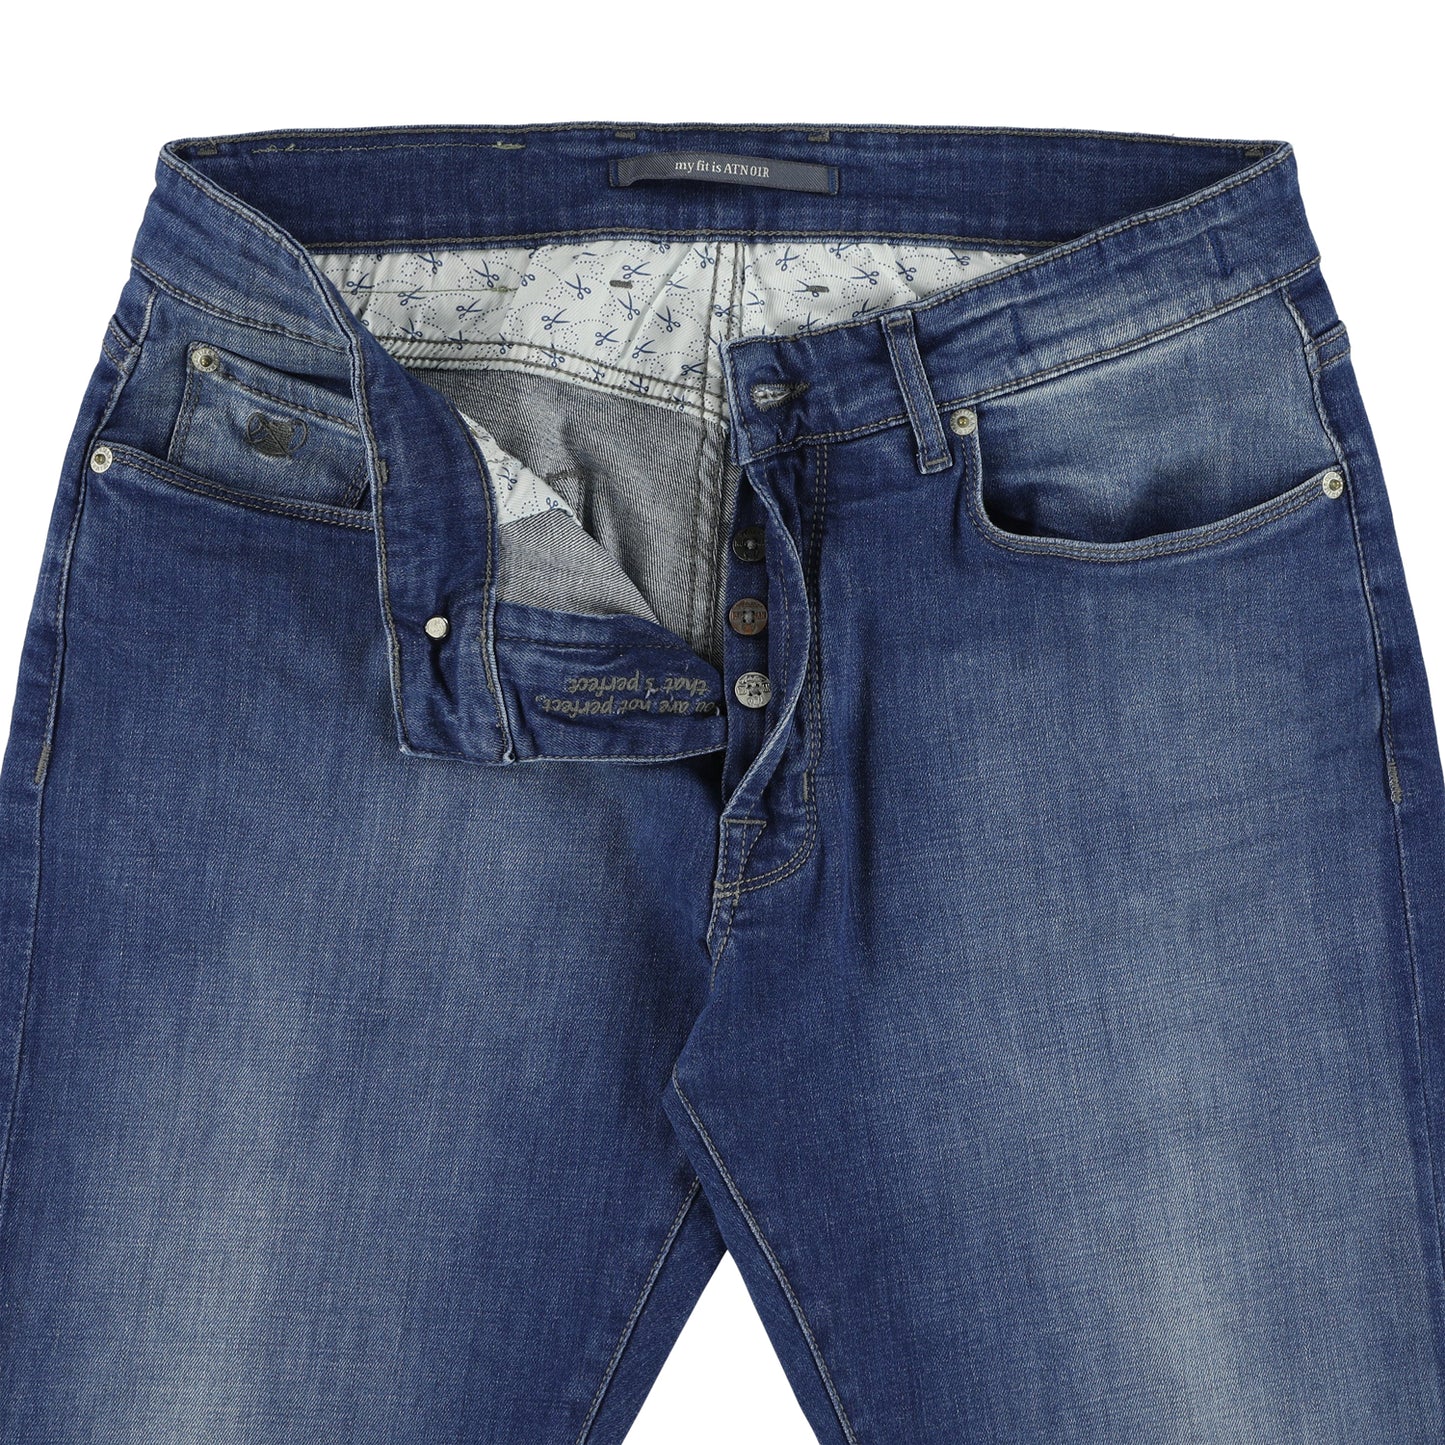 Indigo regular fit jeans Atelier Noterman - 1484/102